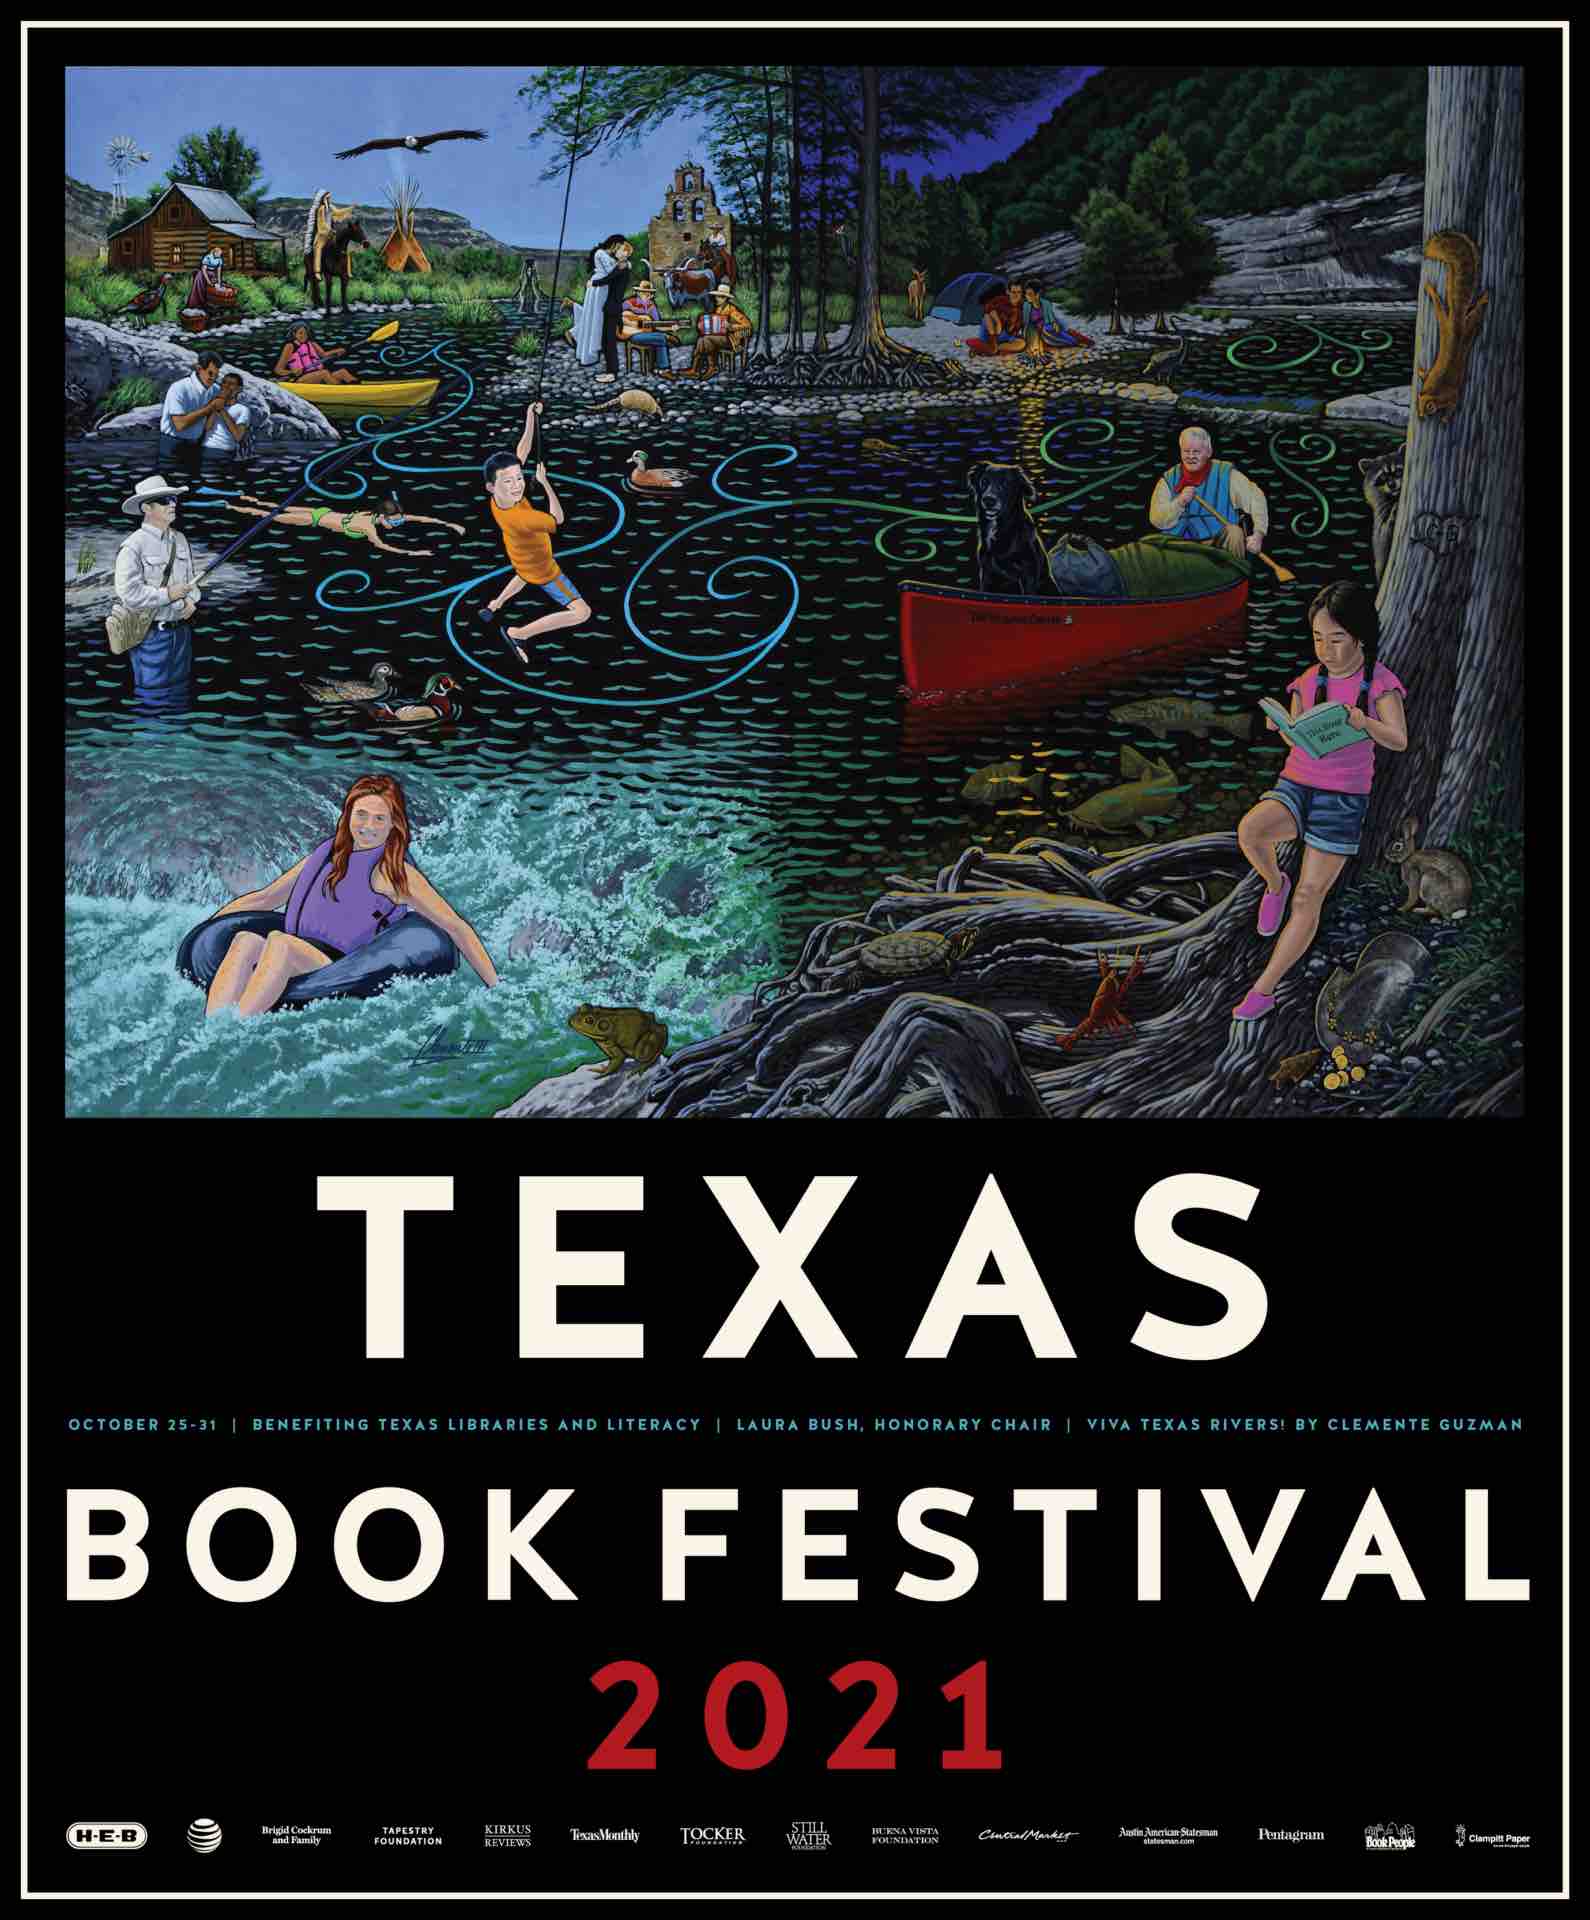 Texas Book Festival 2021 First Authors Announced Colson Whitehead